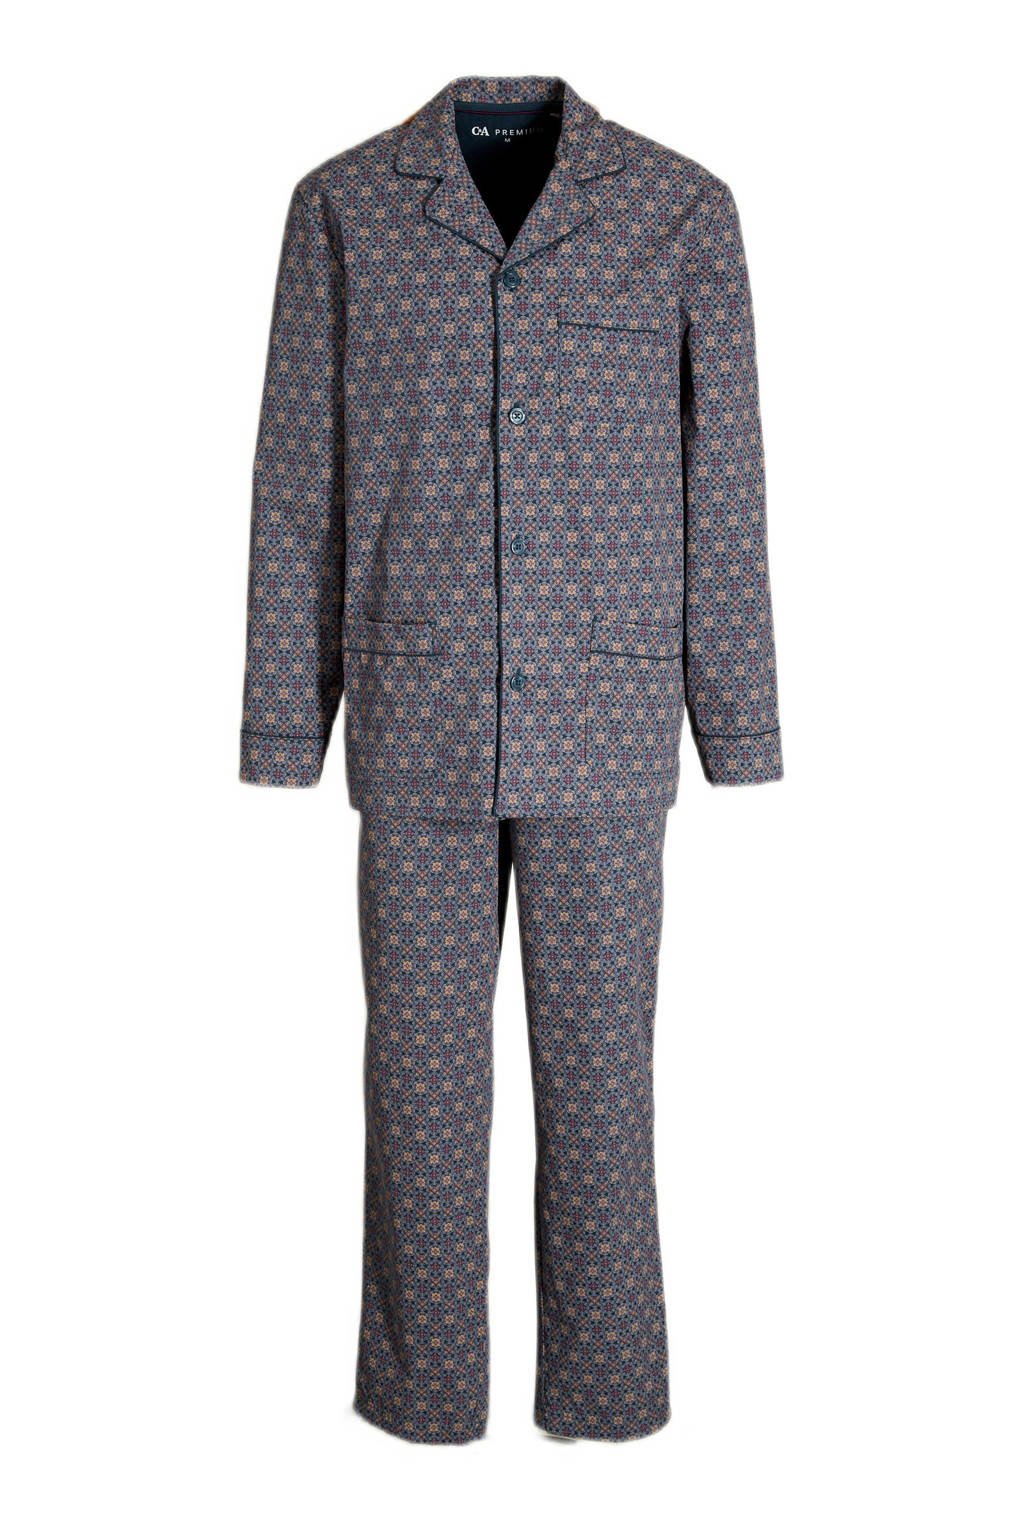 C&A pyjama met all over print donkerblauw, Donkerblauw